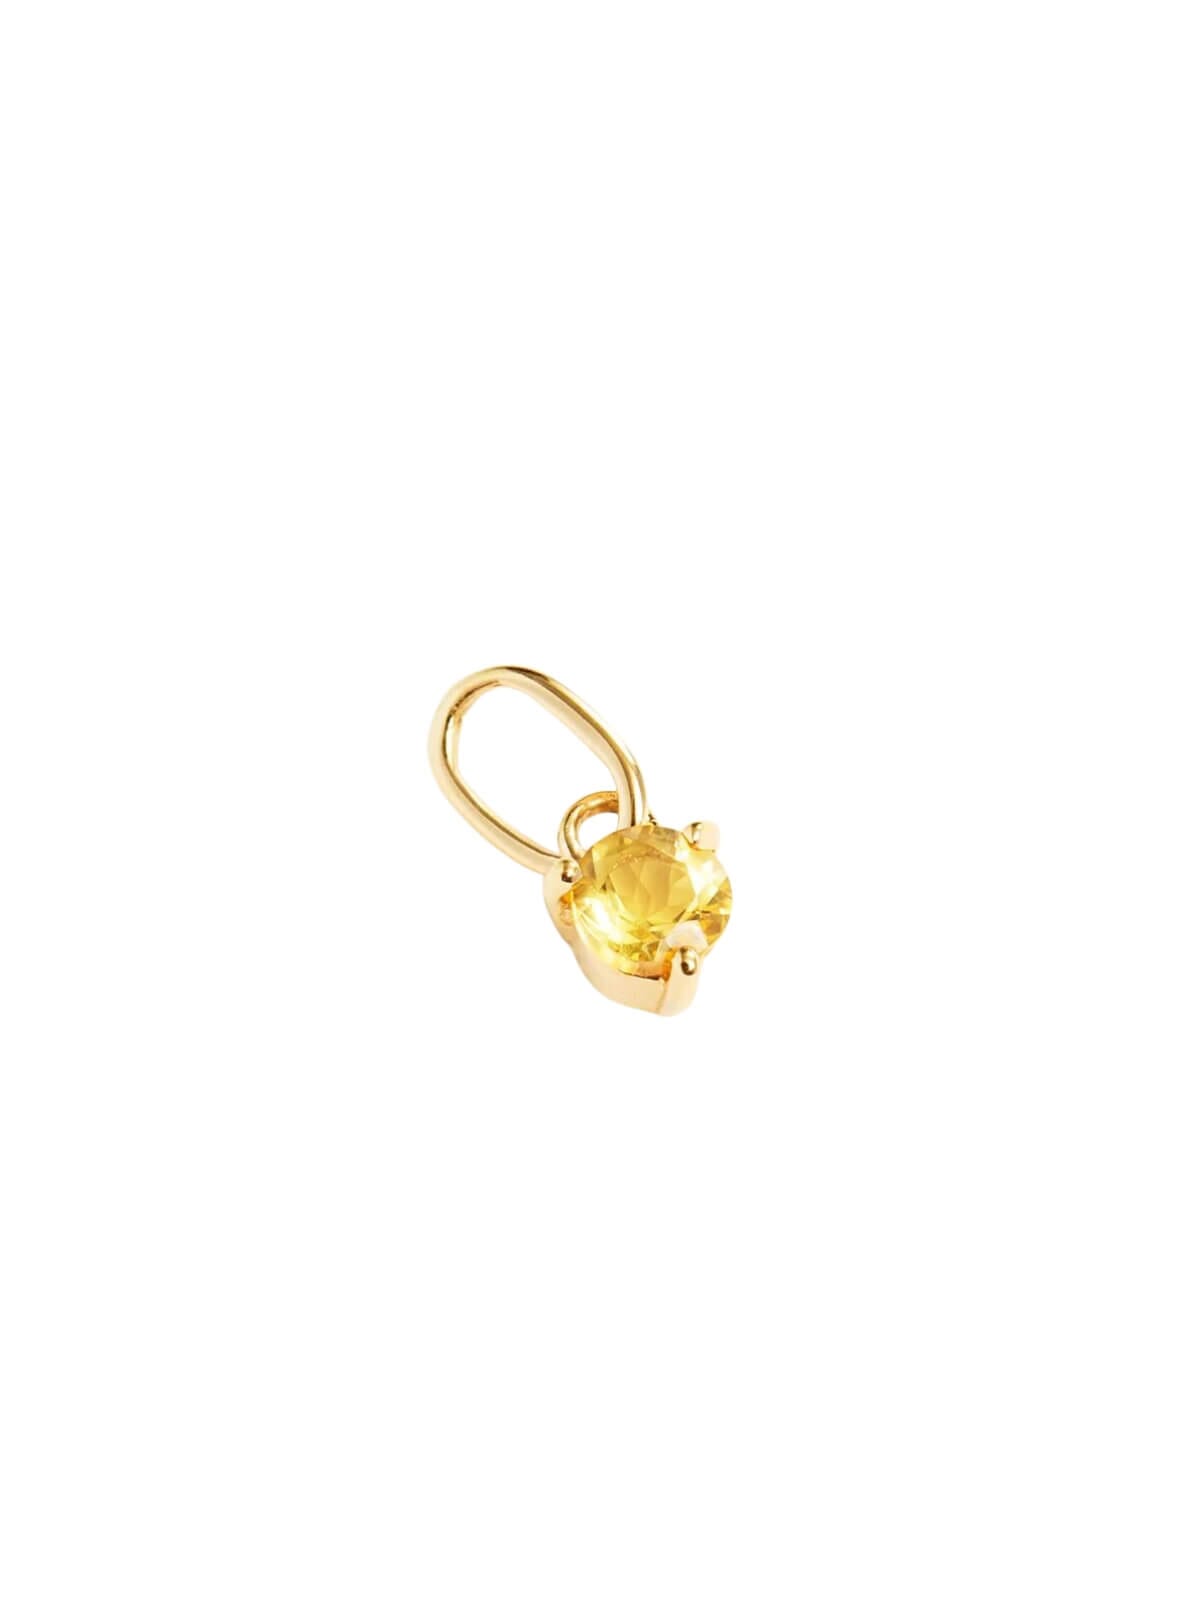 By Charlotte | 14k Gold Always In My Heart Birthstone Necklace Pendant - November - Citrine | Perlu